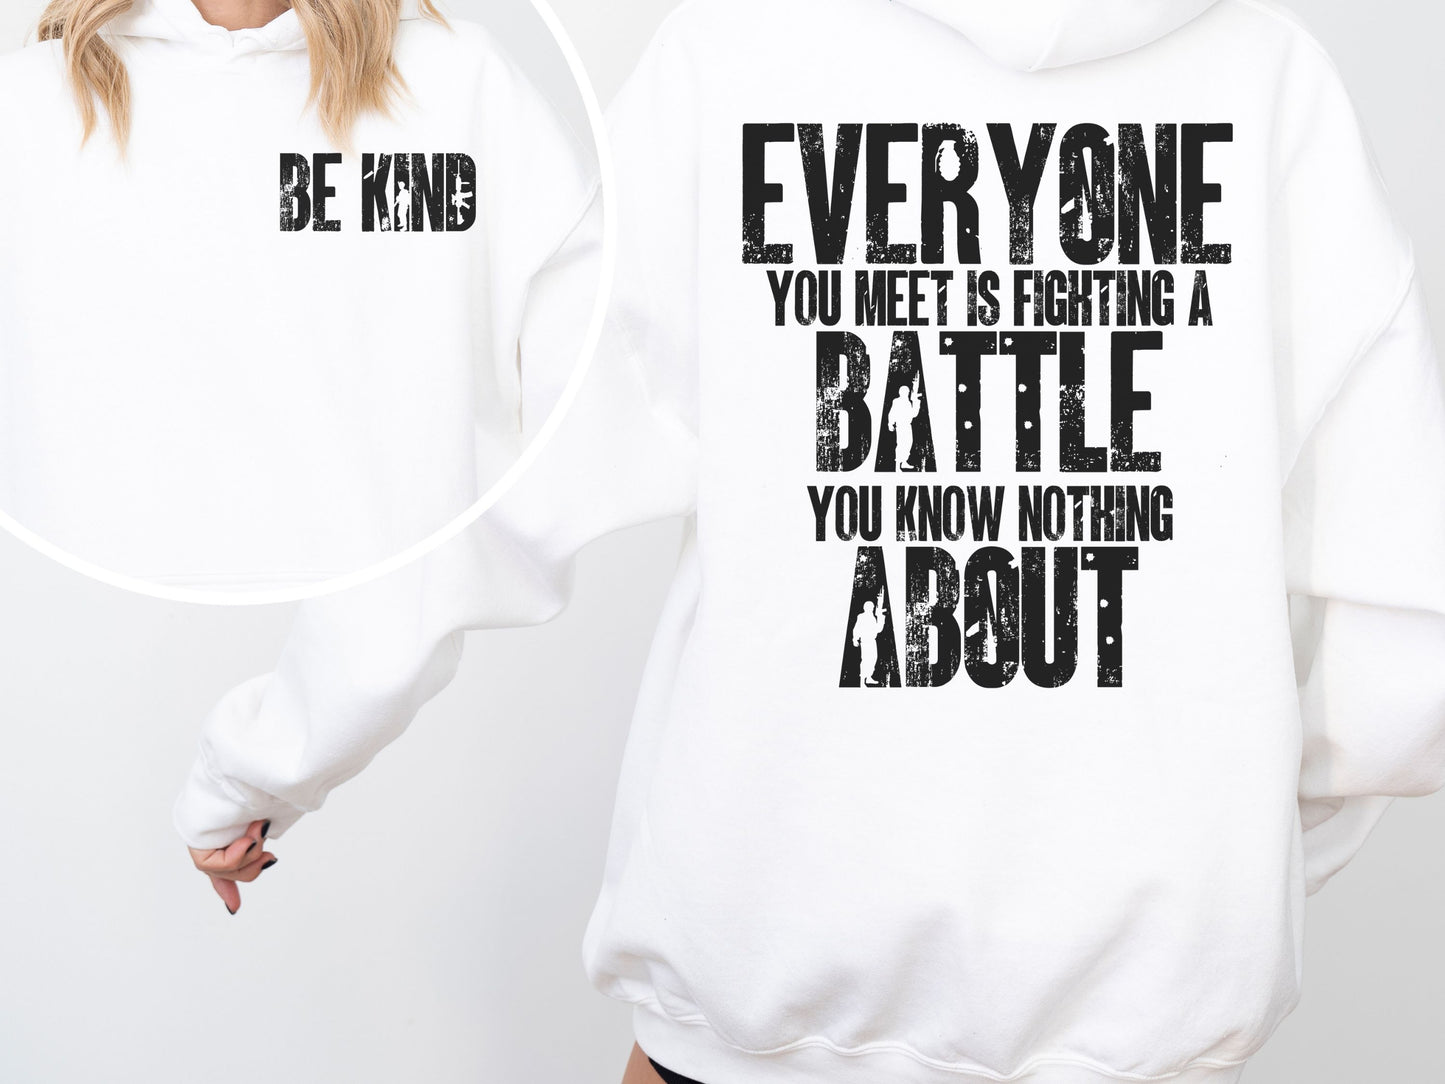 Be Kind, Everyone is Fighting a Battle - Spread Positivity. Empathy-Inspired Sweatshirt